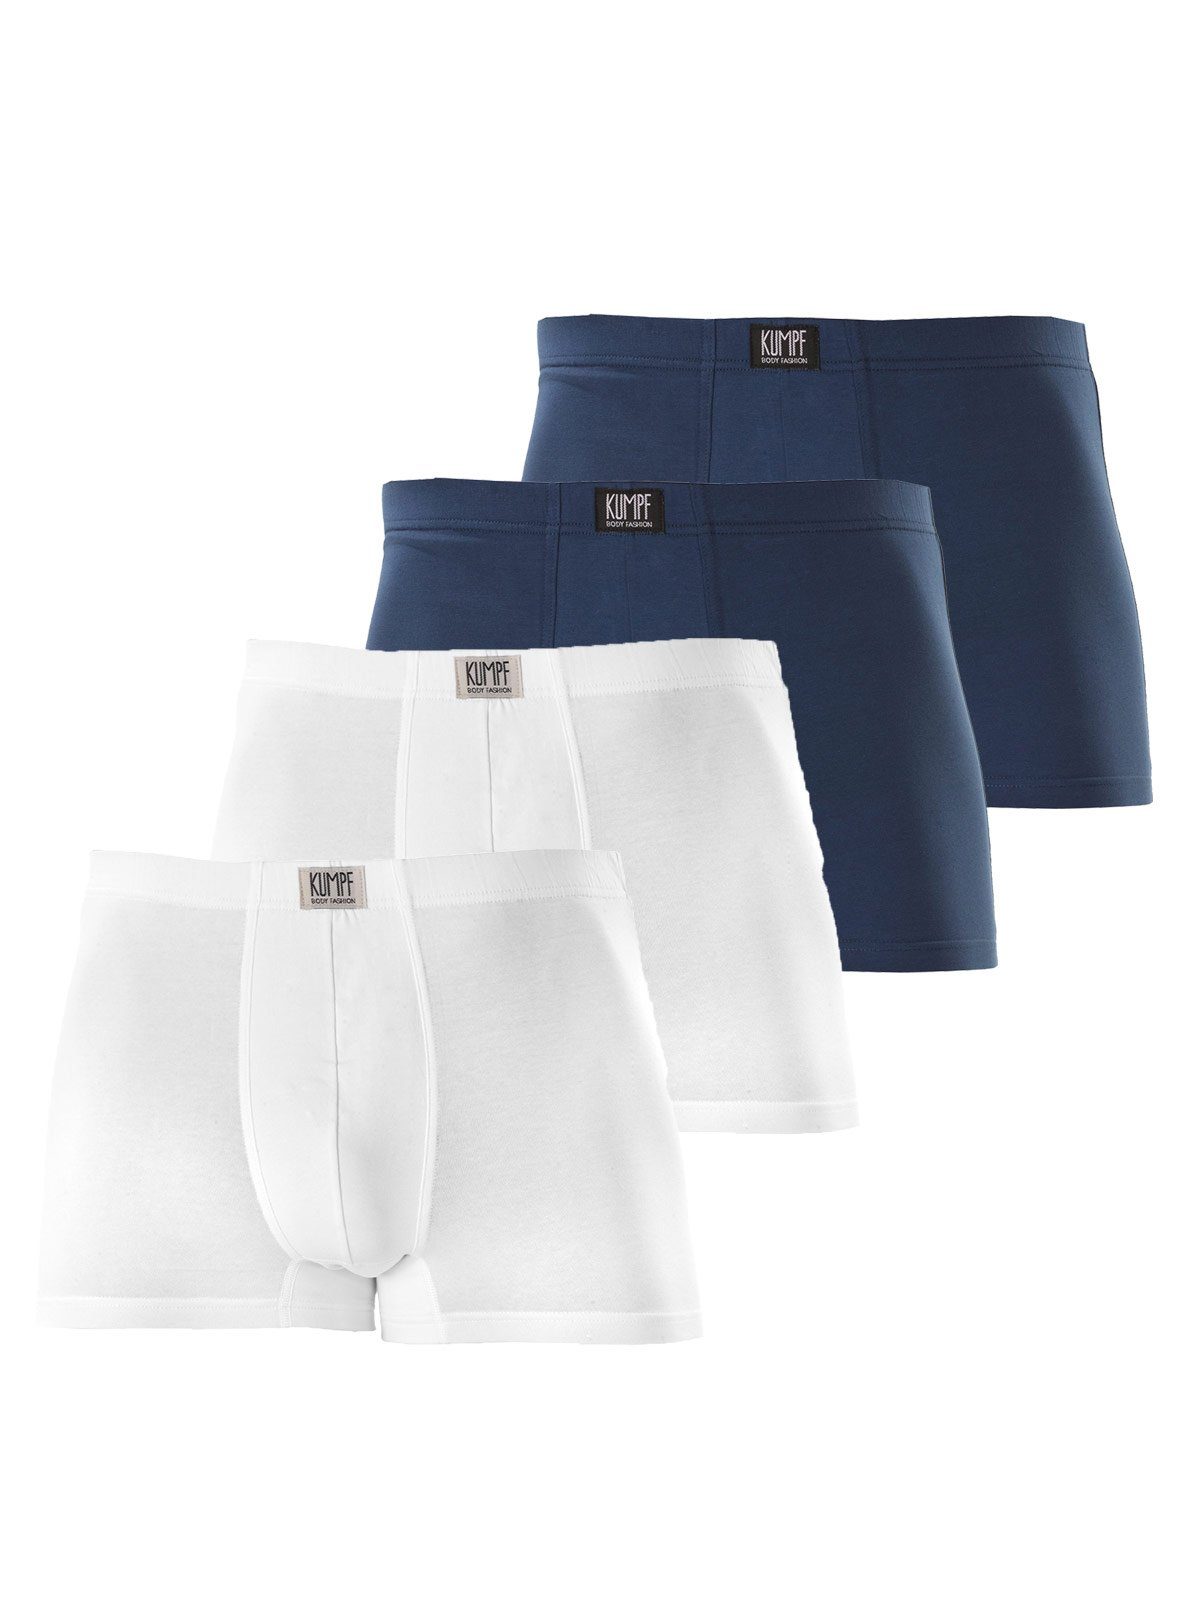 KUMPF Retro Pants 4er Sparpack Herren Pants Bio Cotton (Spar-Set, 4-St) hohe Markenqualität darkblue weiss